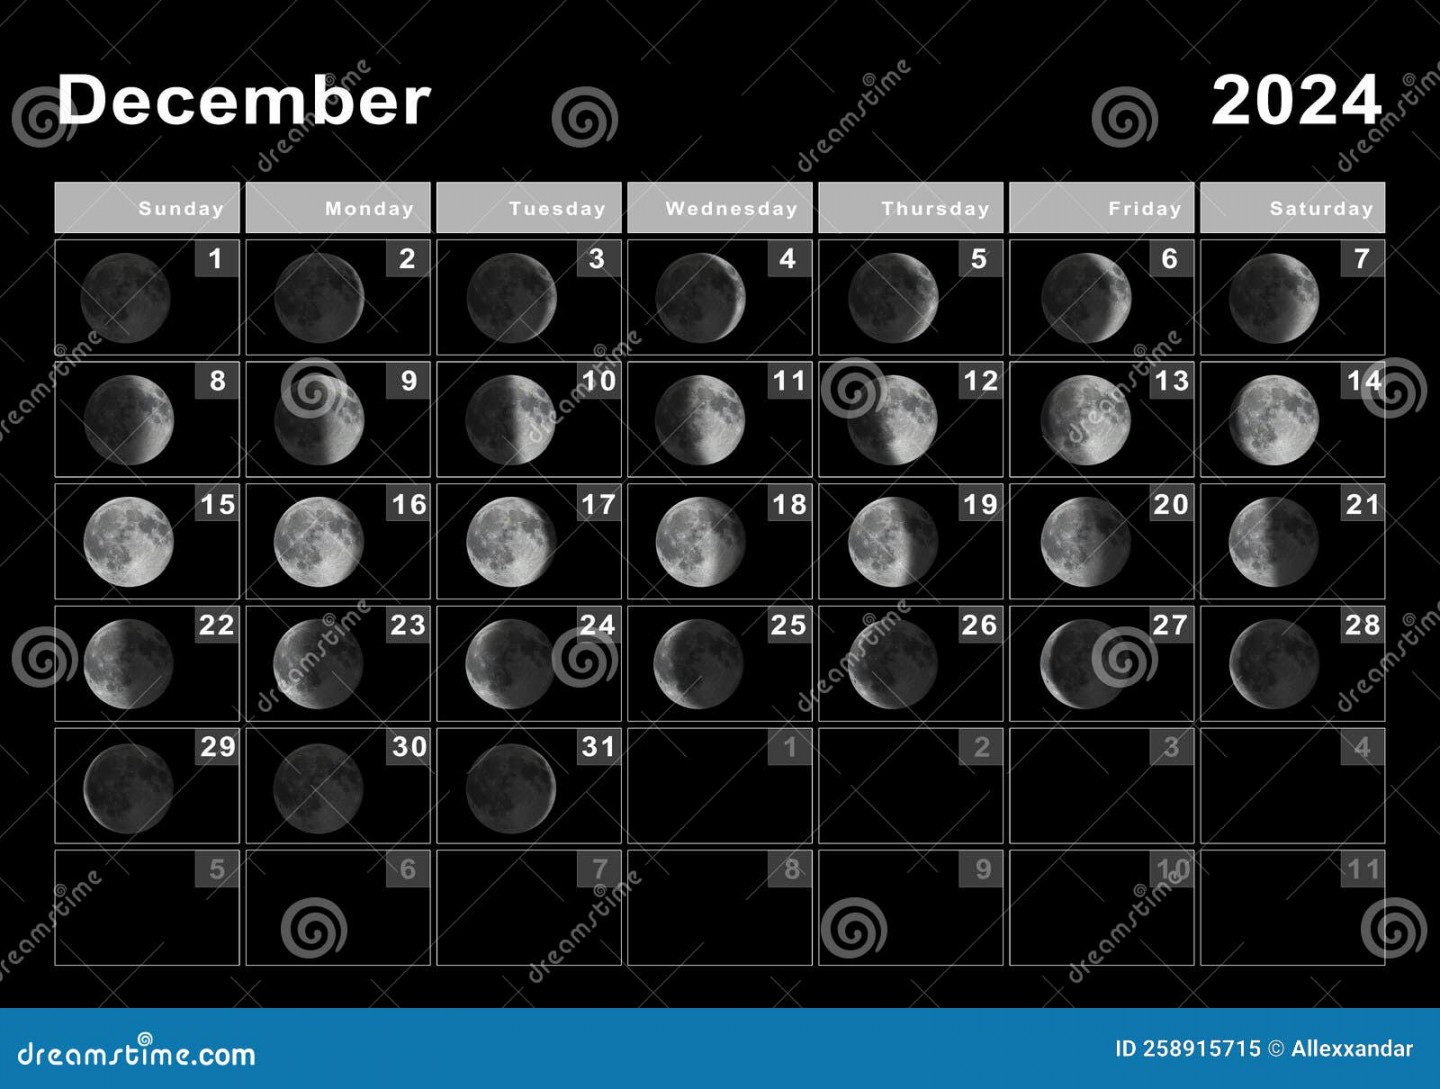 December Lunar Calendar, Moon Cycles Stock Illustration